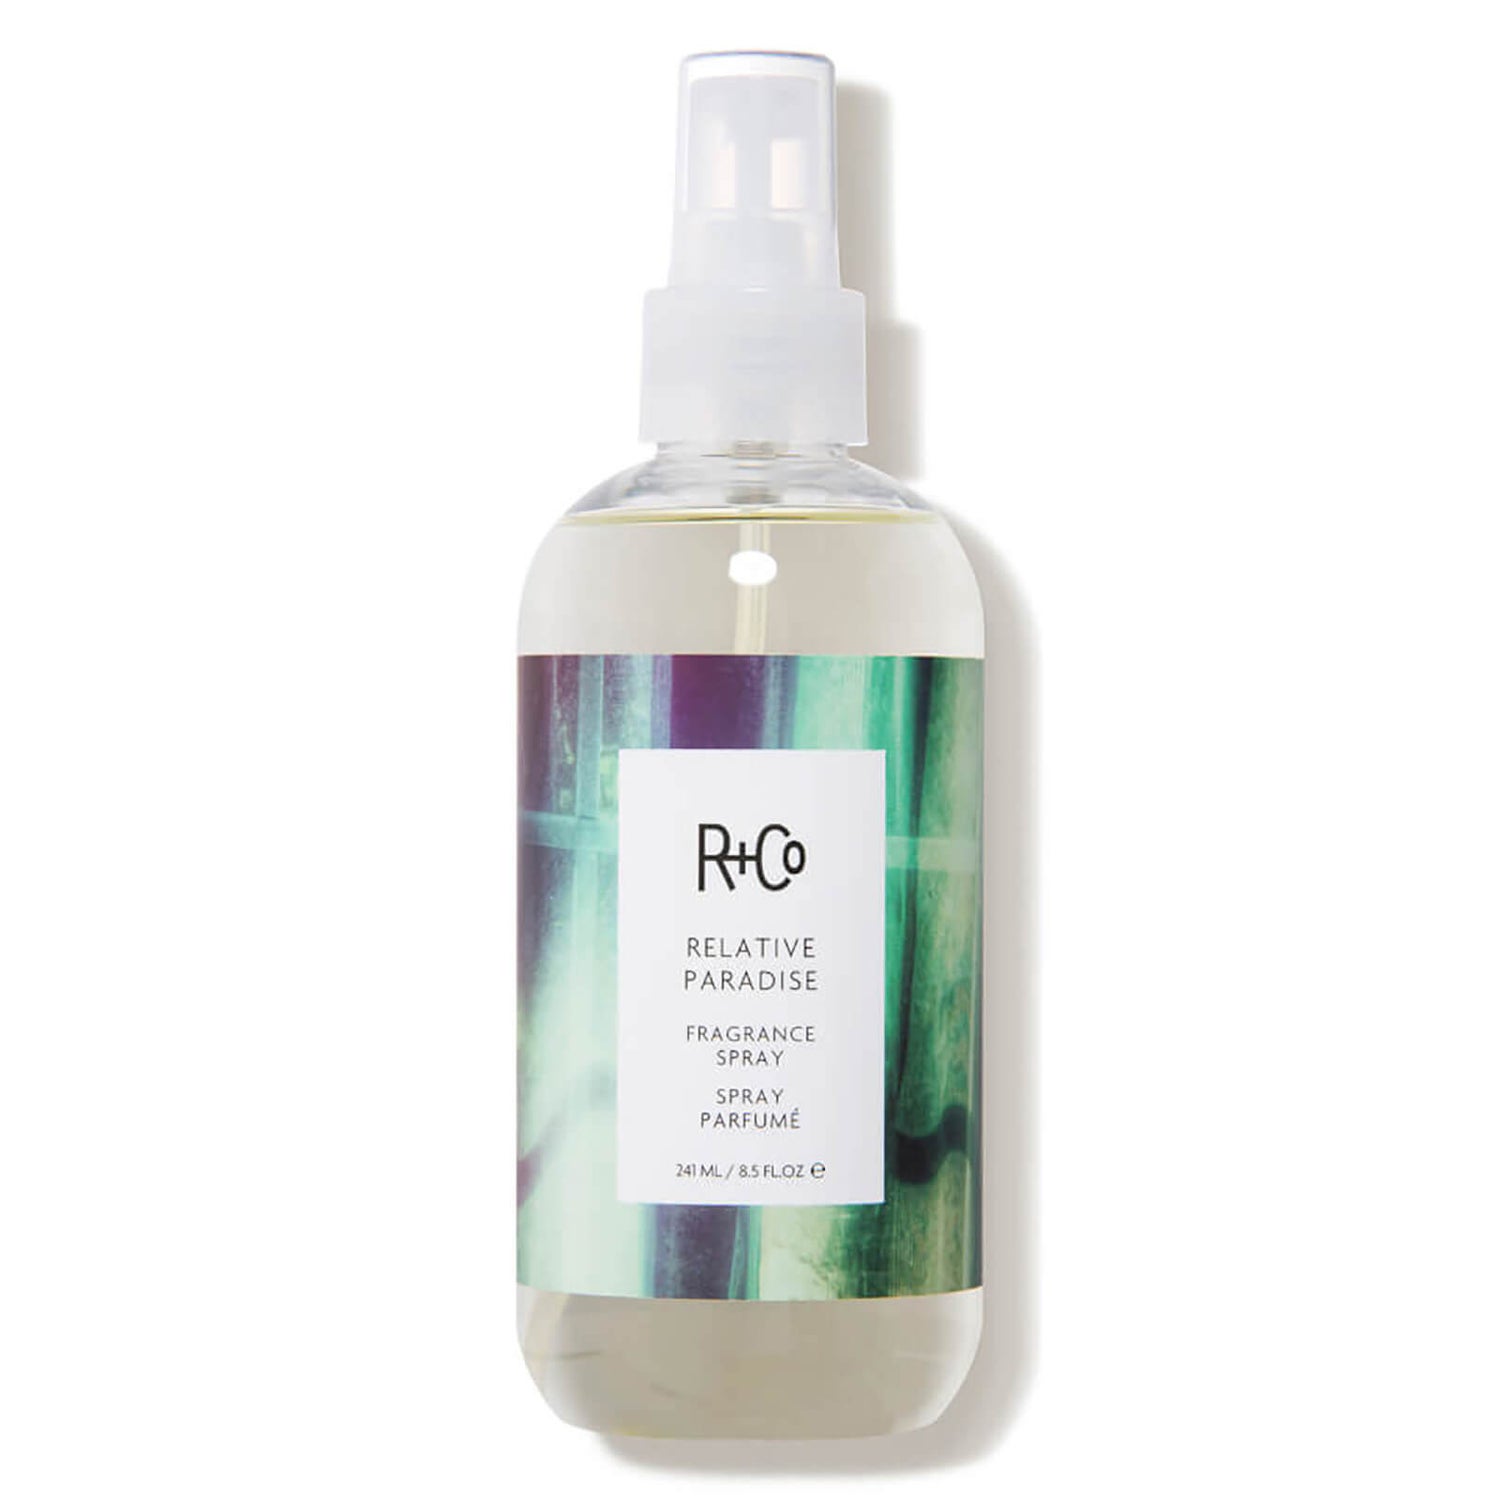 R+Co RELATIVE PARADISE Fragrance Spray (8.5 fl. oz.)